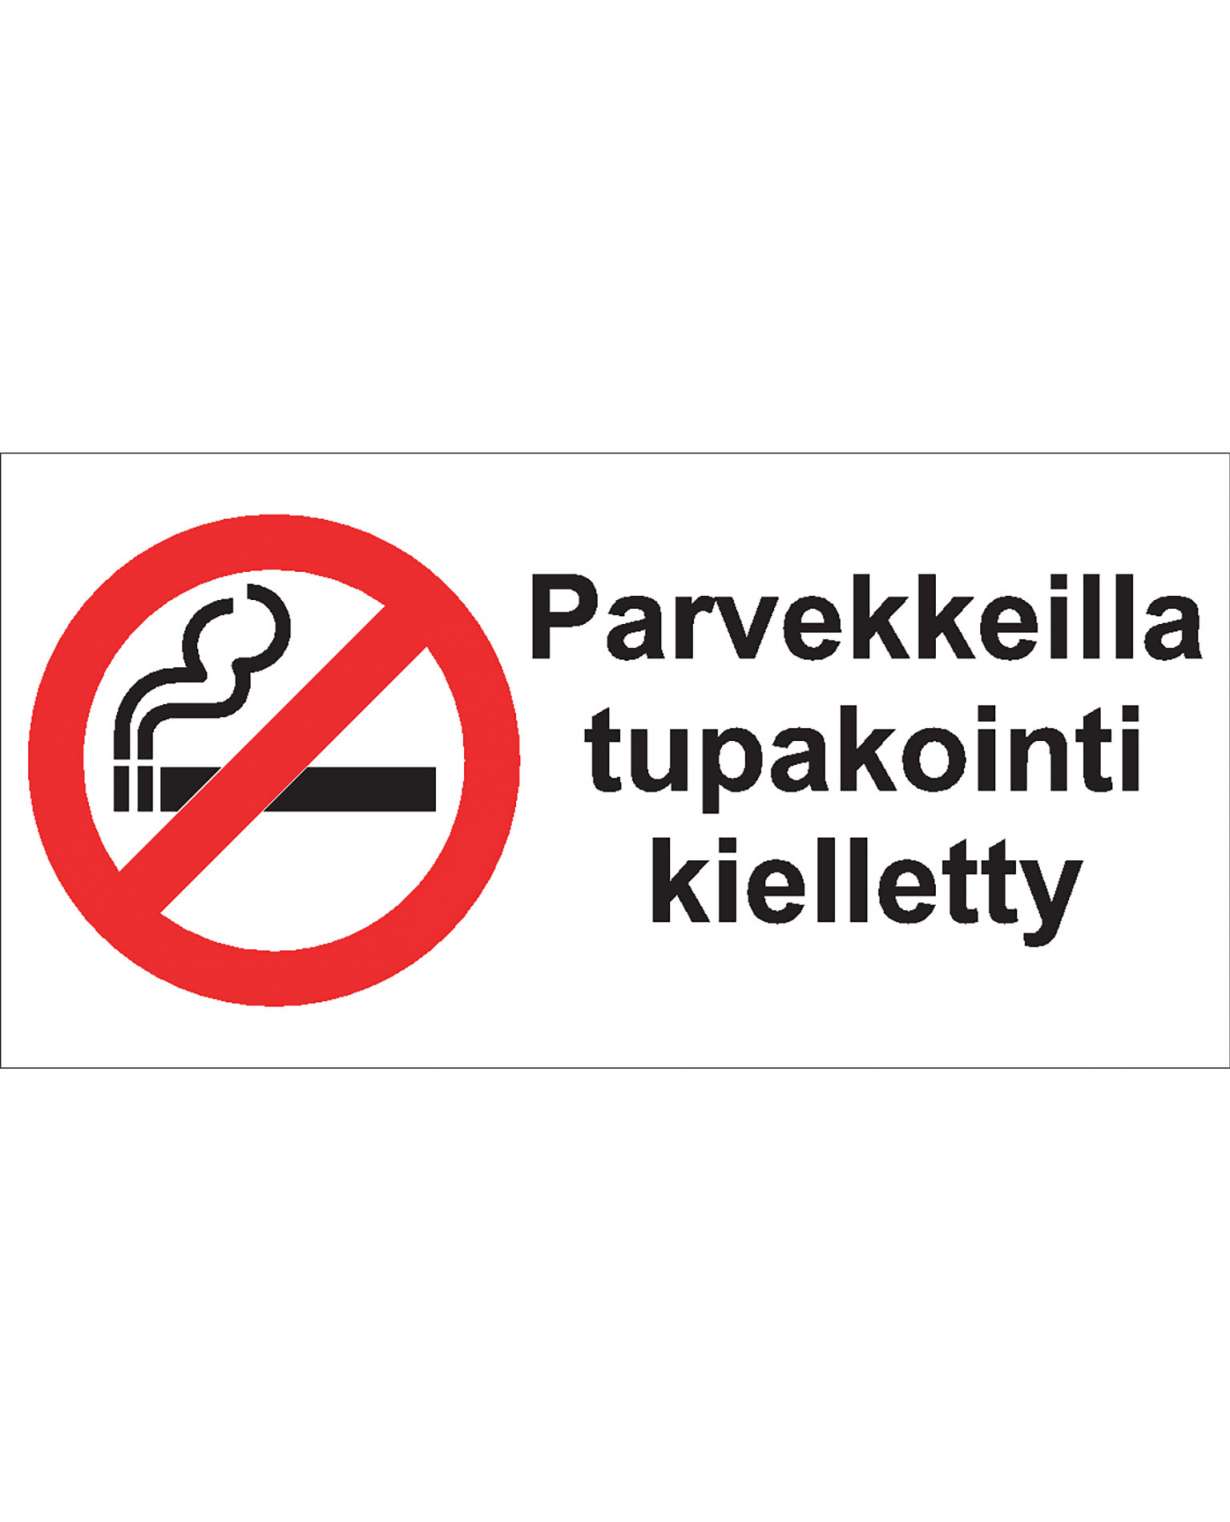 Parvekkeilla tupakointi kielletty, Magneetti, 400x200 mm